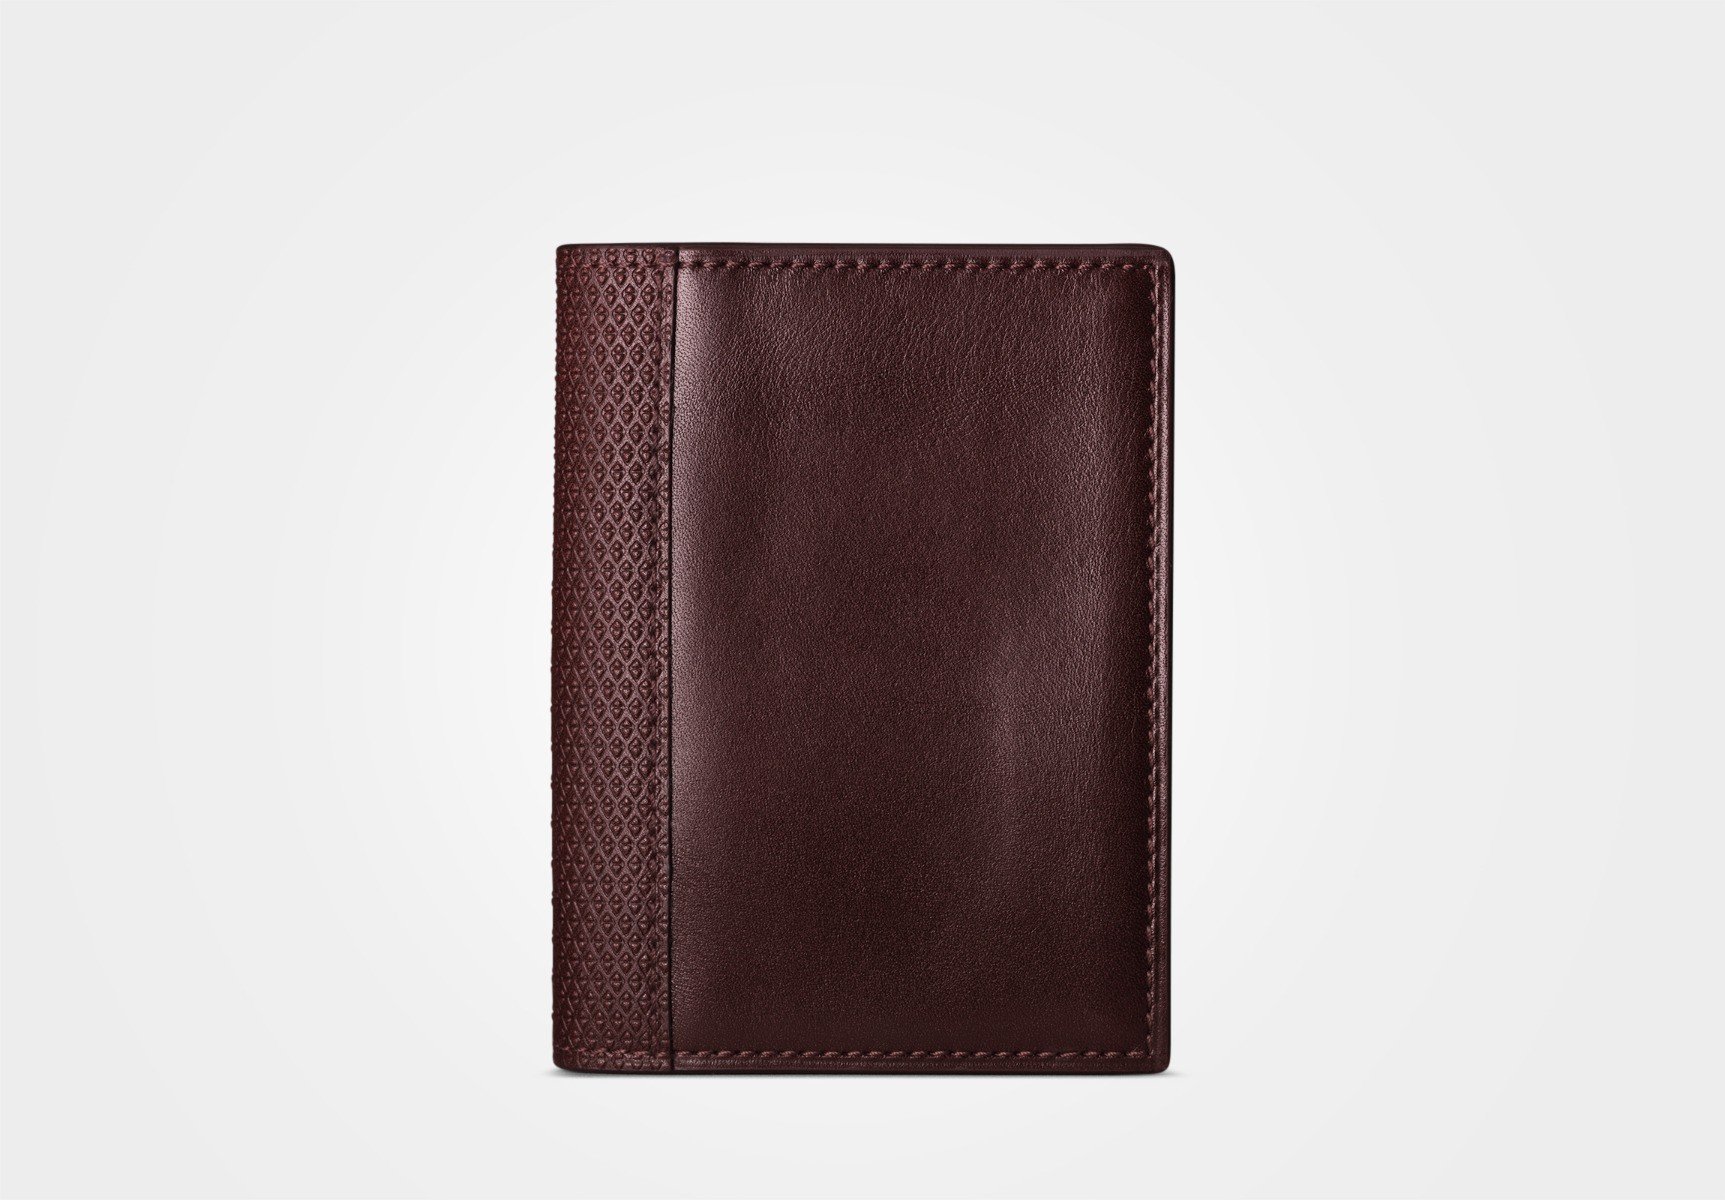 Card Holder - Brown leather gusseted card holder